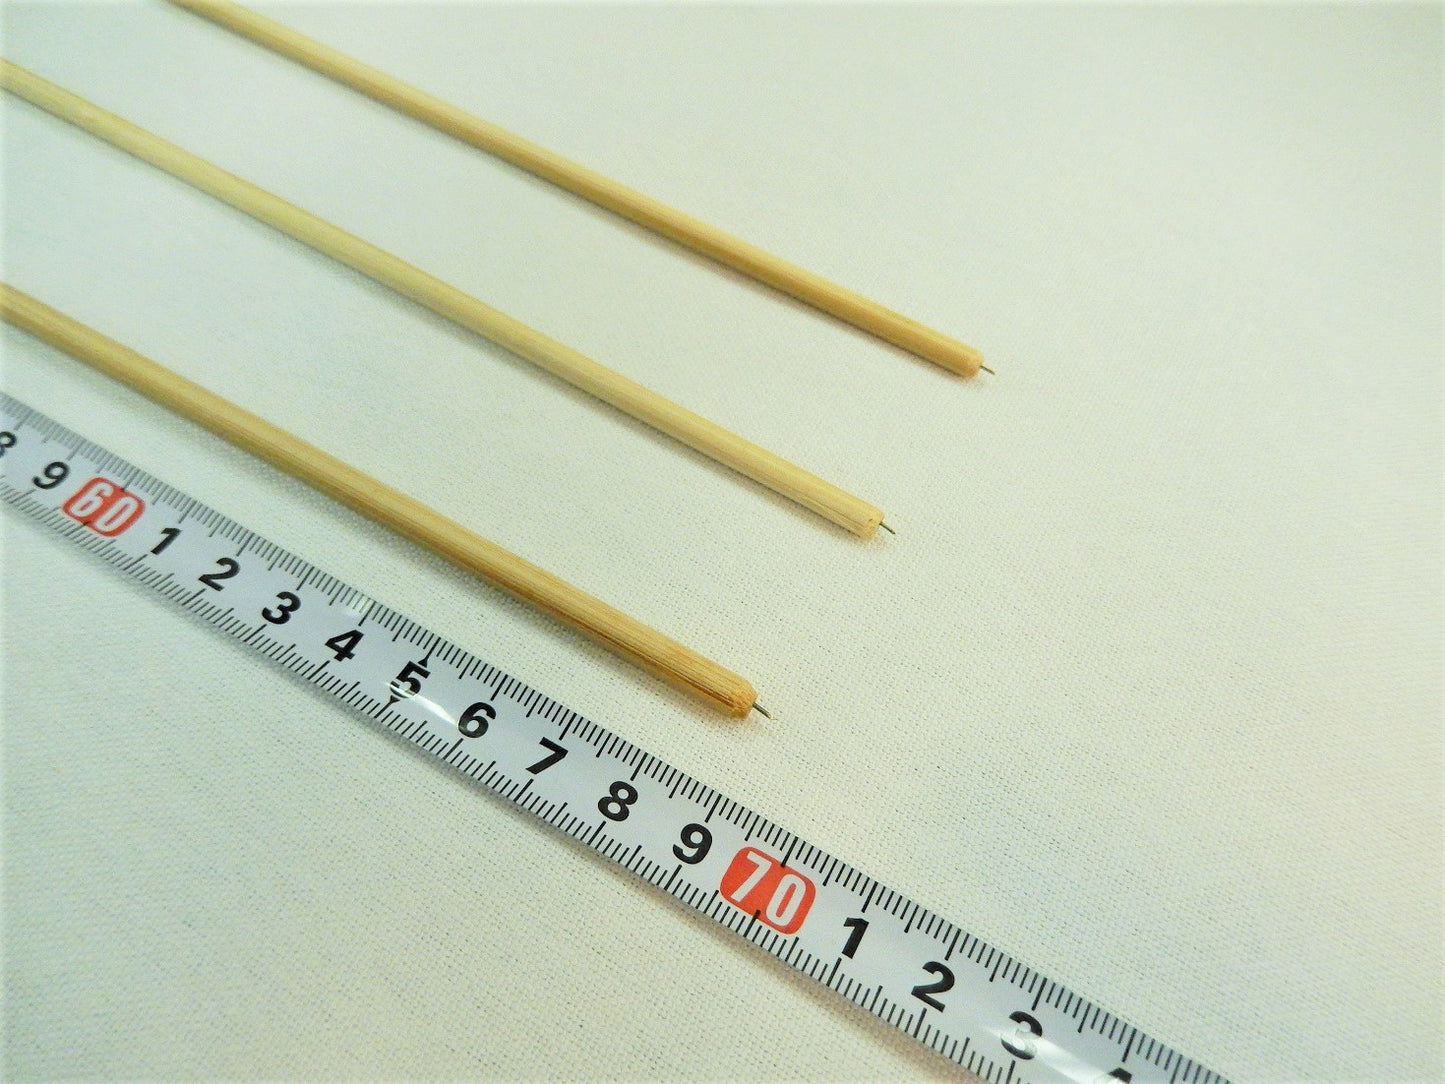 Shinshi (10 pieces) - Longer size